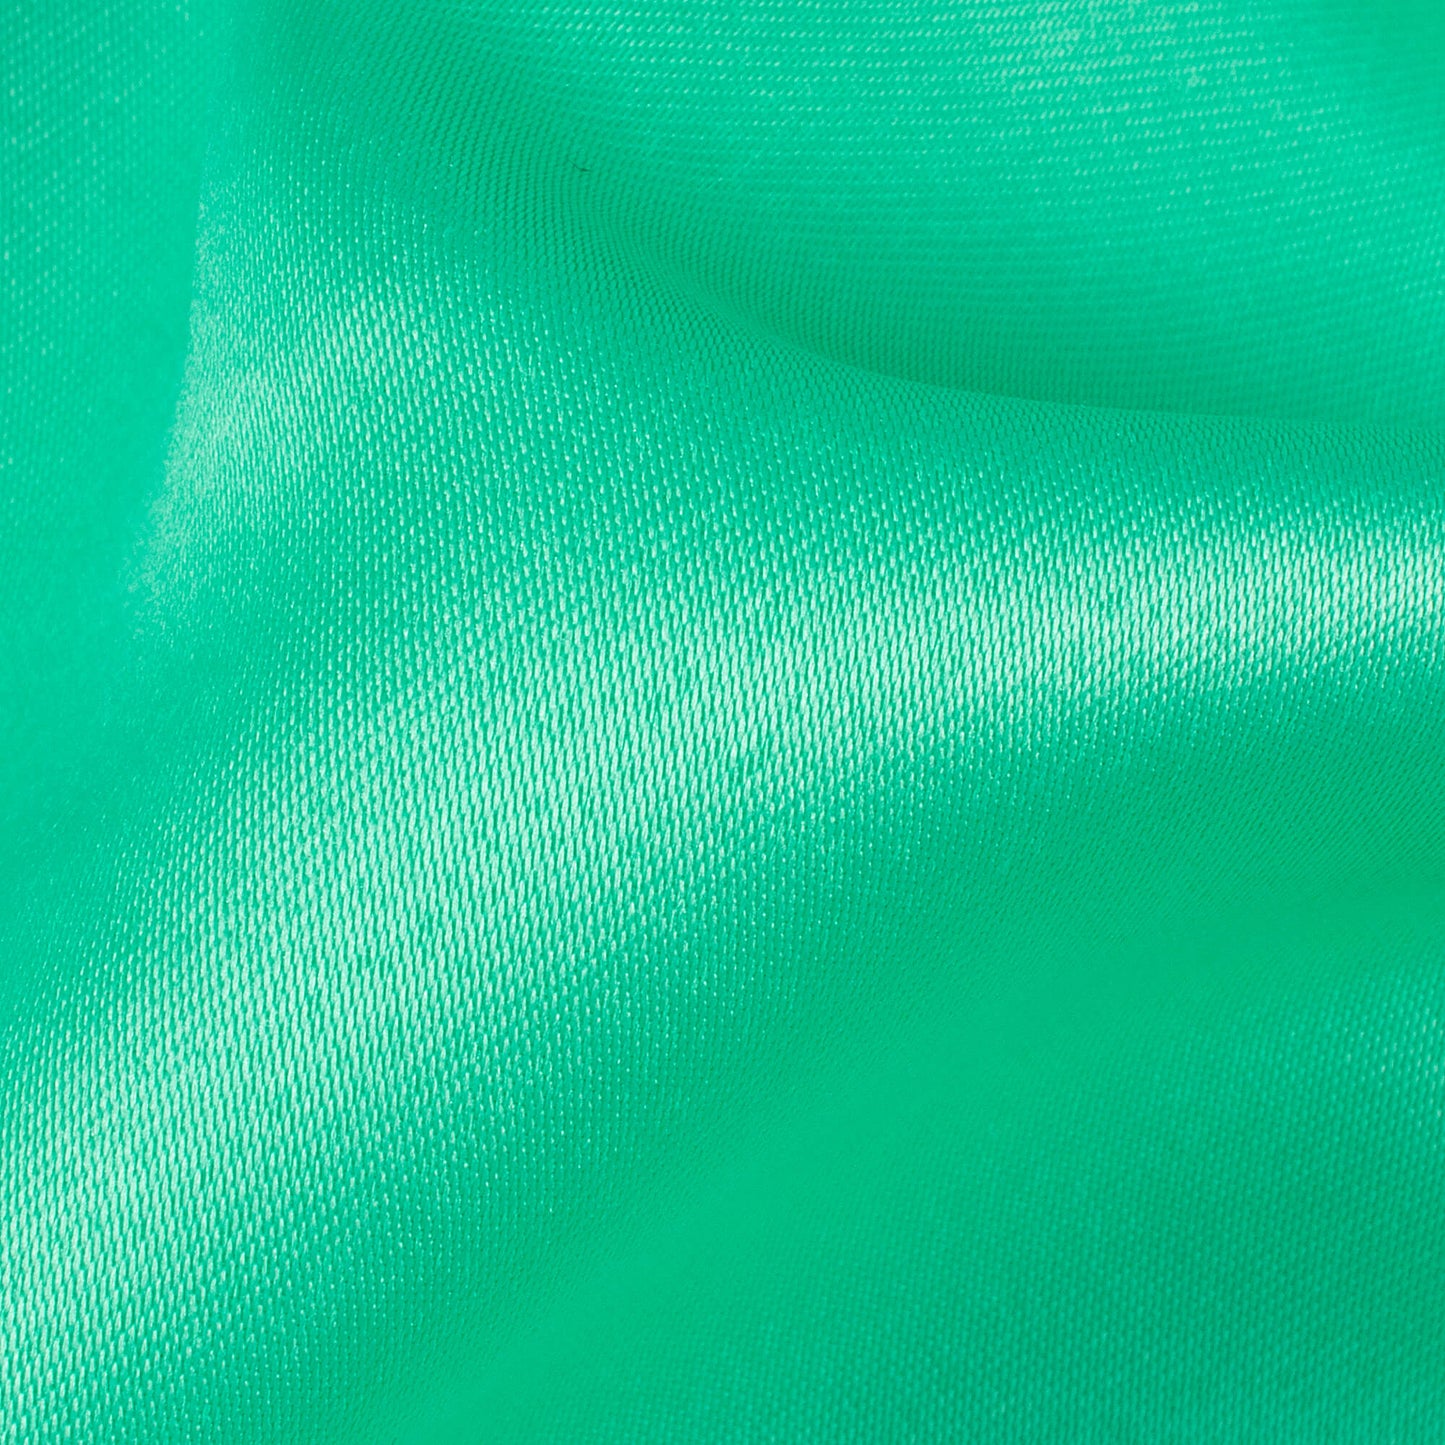 Seafoam Green Plain Taffeta Satin Fabric (Width 58 Inches)